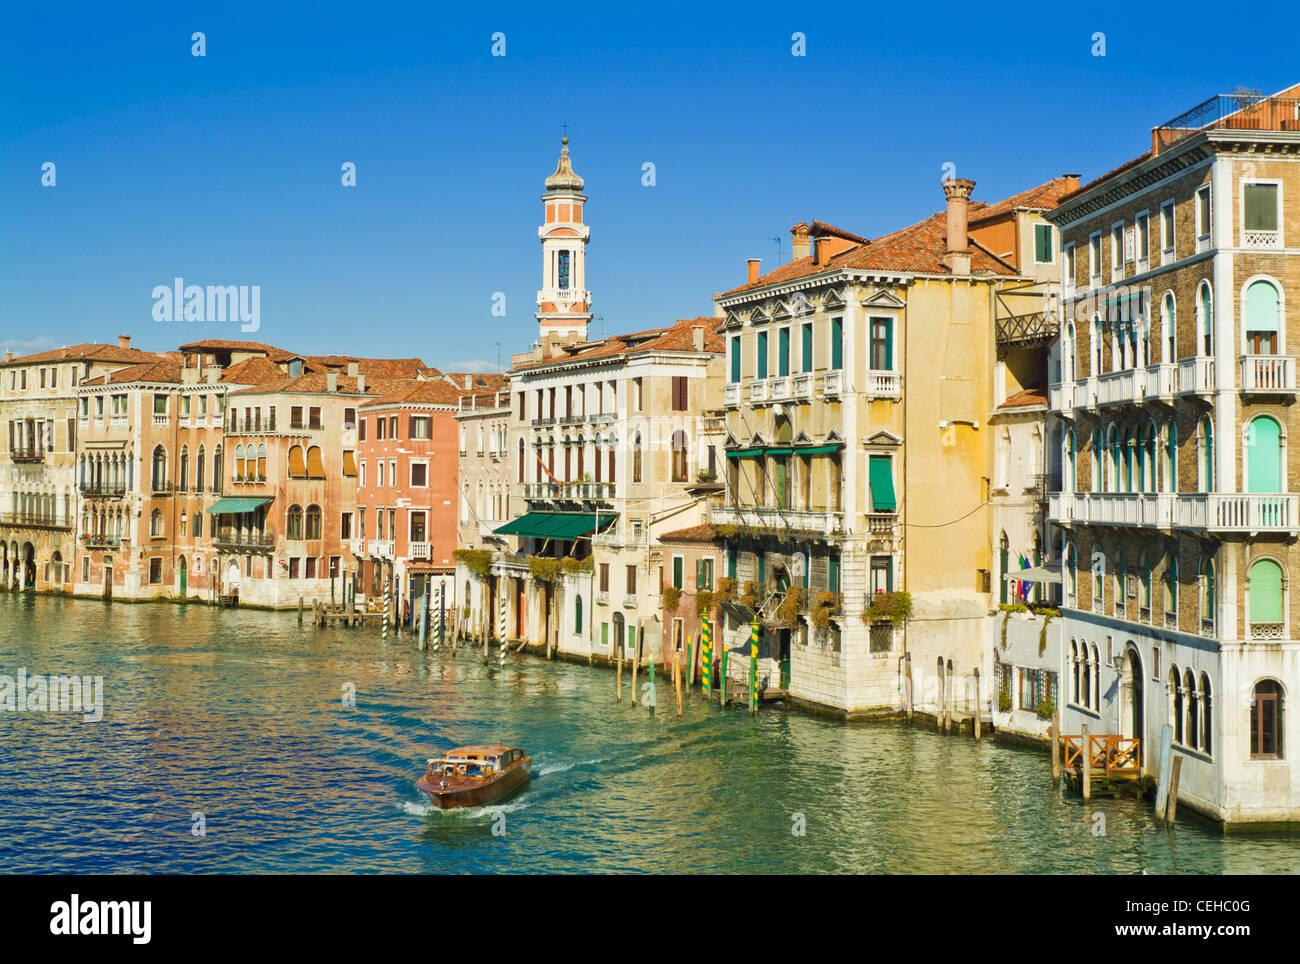 Vaporetto on the Venice Grand Canal Venice italy eu europe Stock Photo